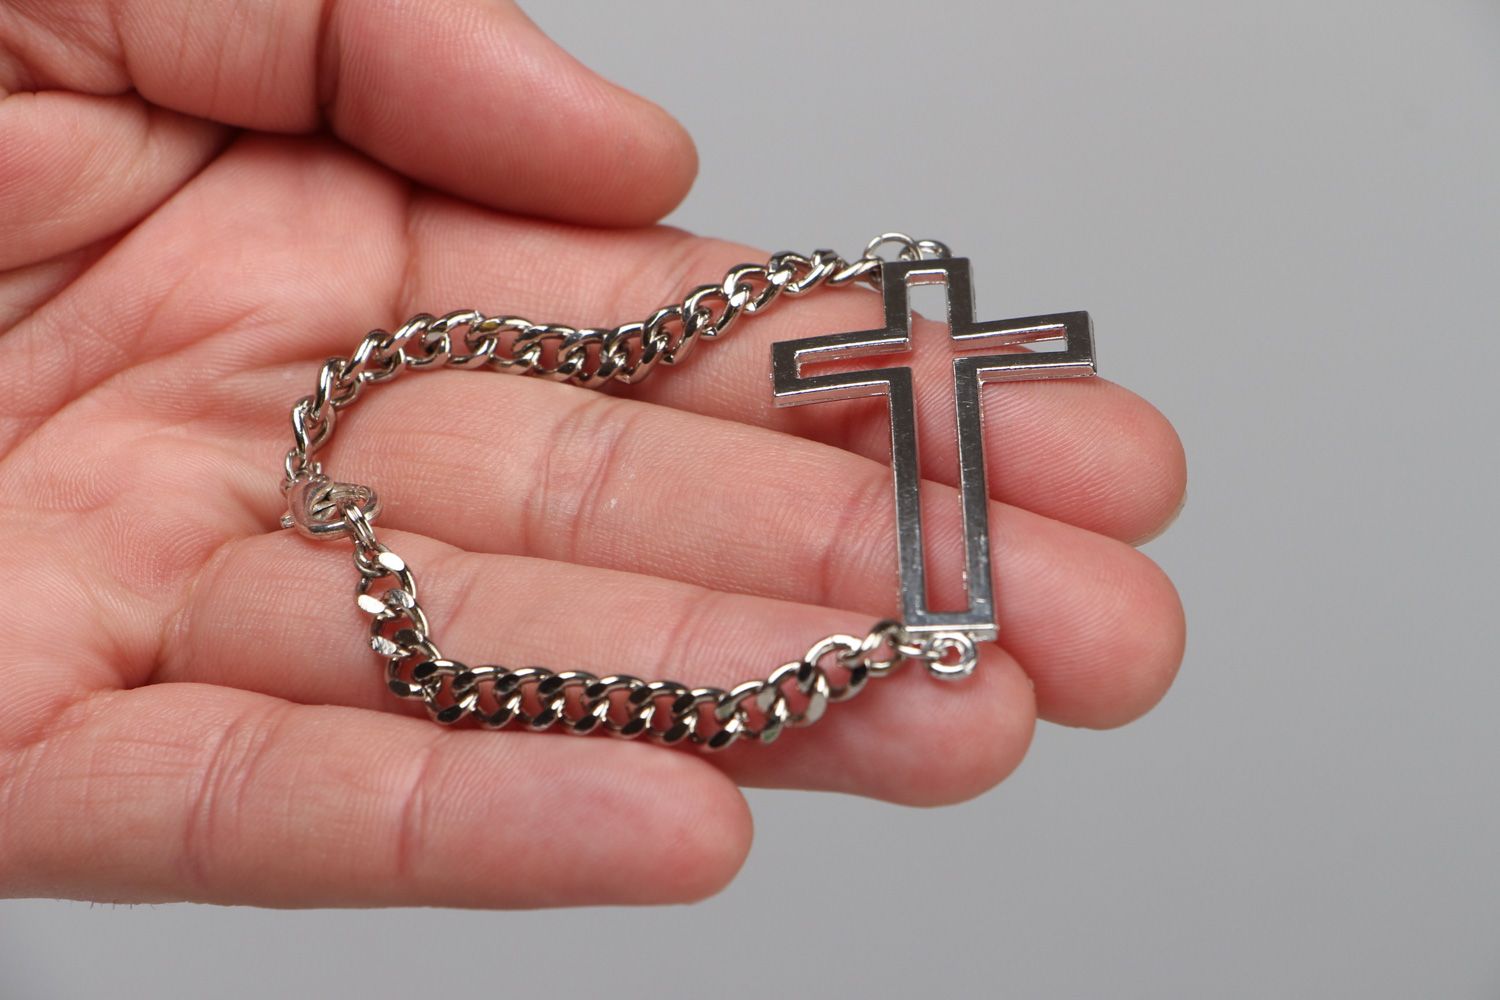 Handmade fashionable metal chain wrist bracelet with cross charm for women photo 3